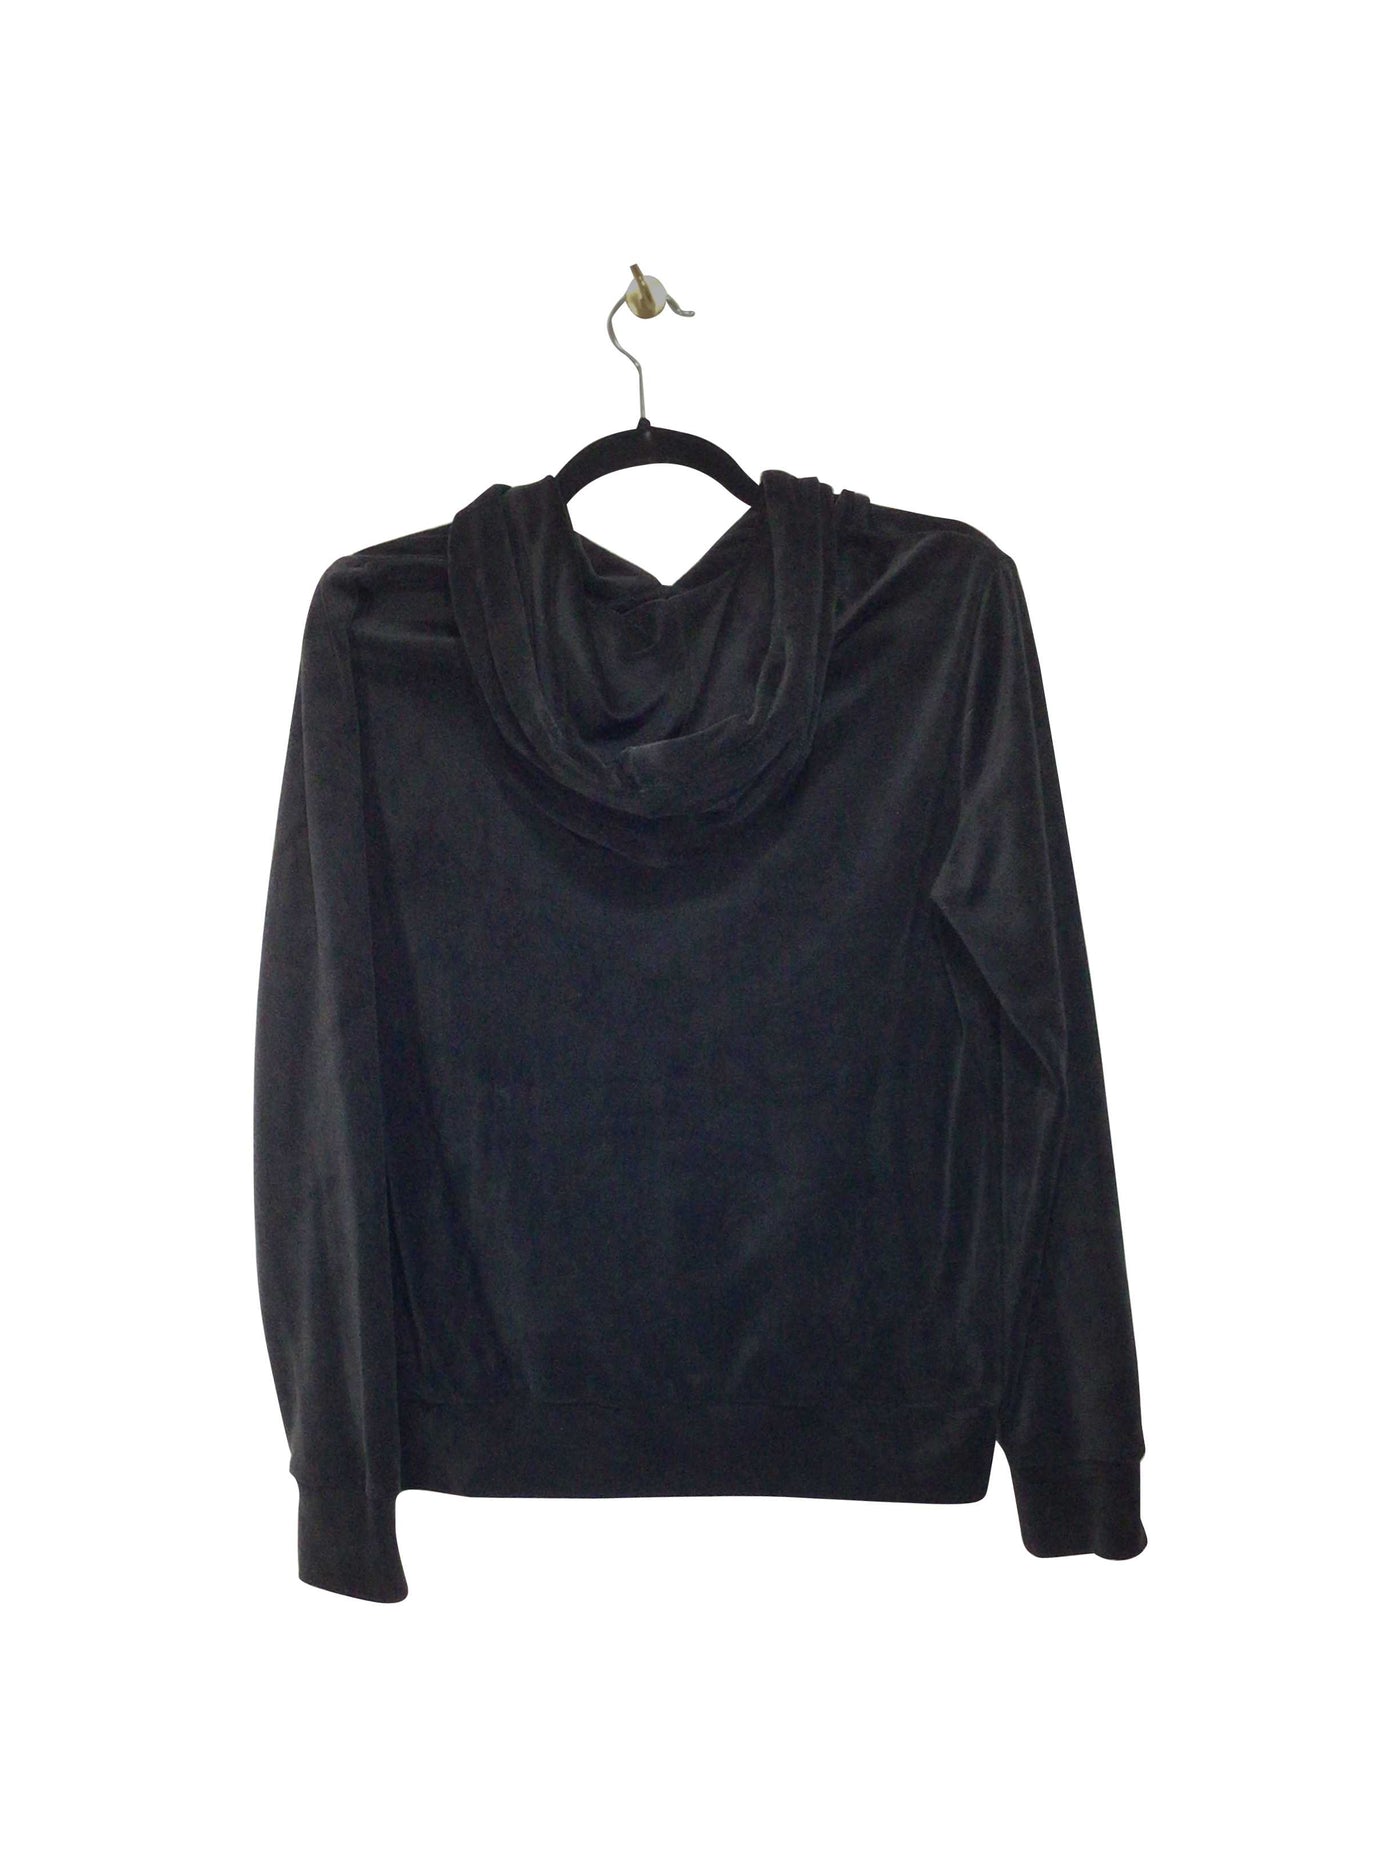 SHAMBALA Regular fit Sweatshirt in Black  -  S  9.99 Koop